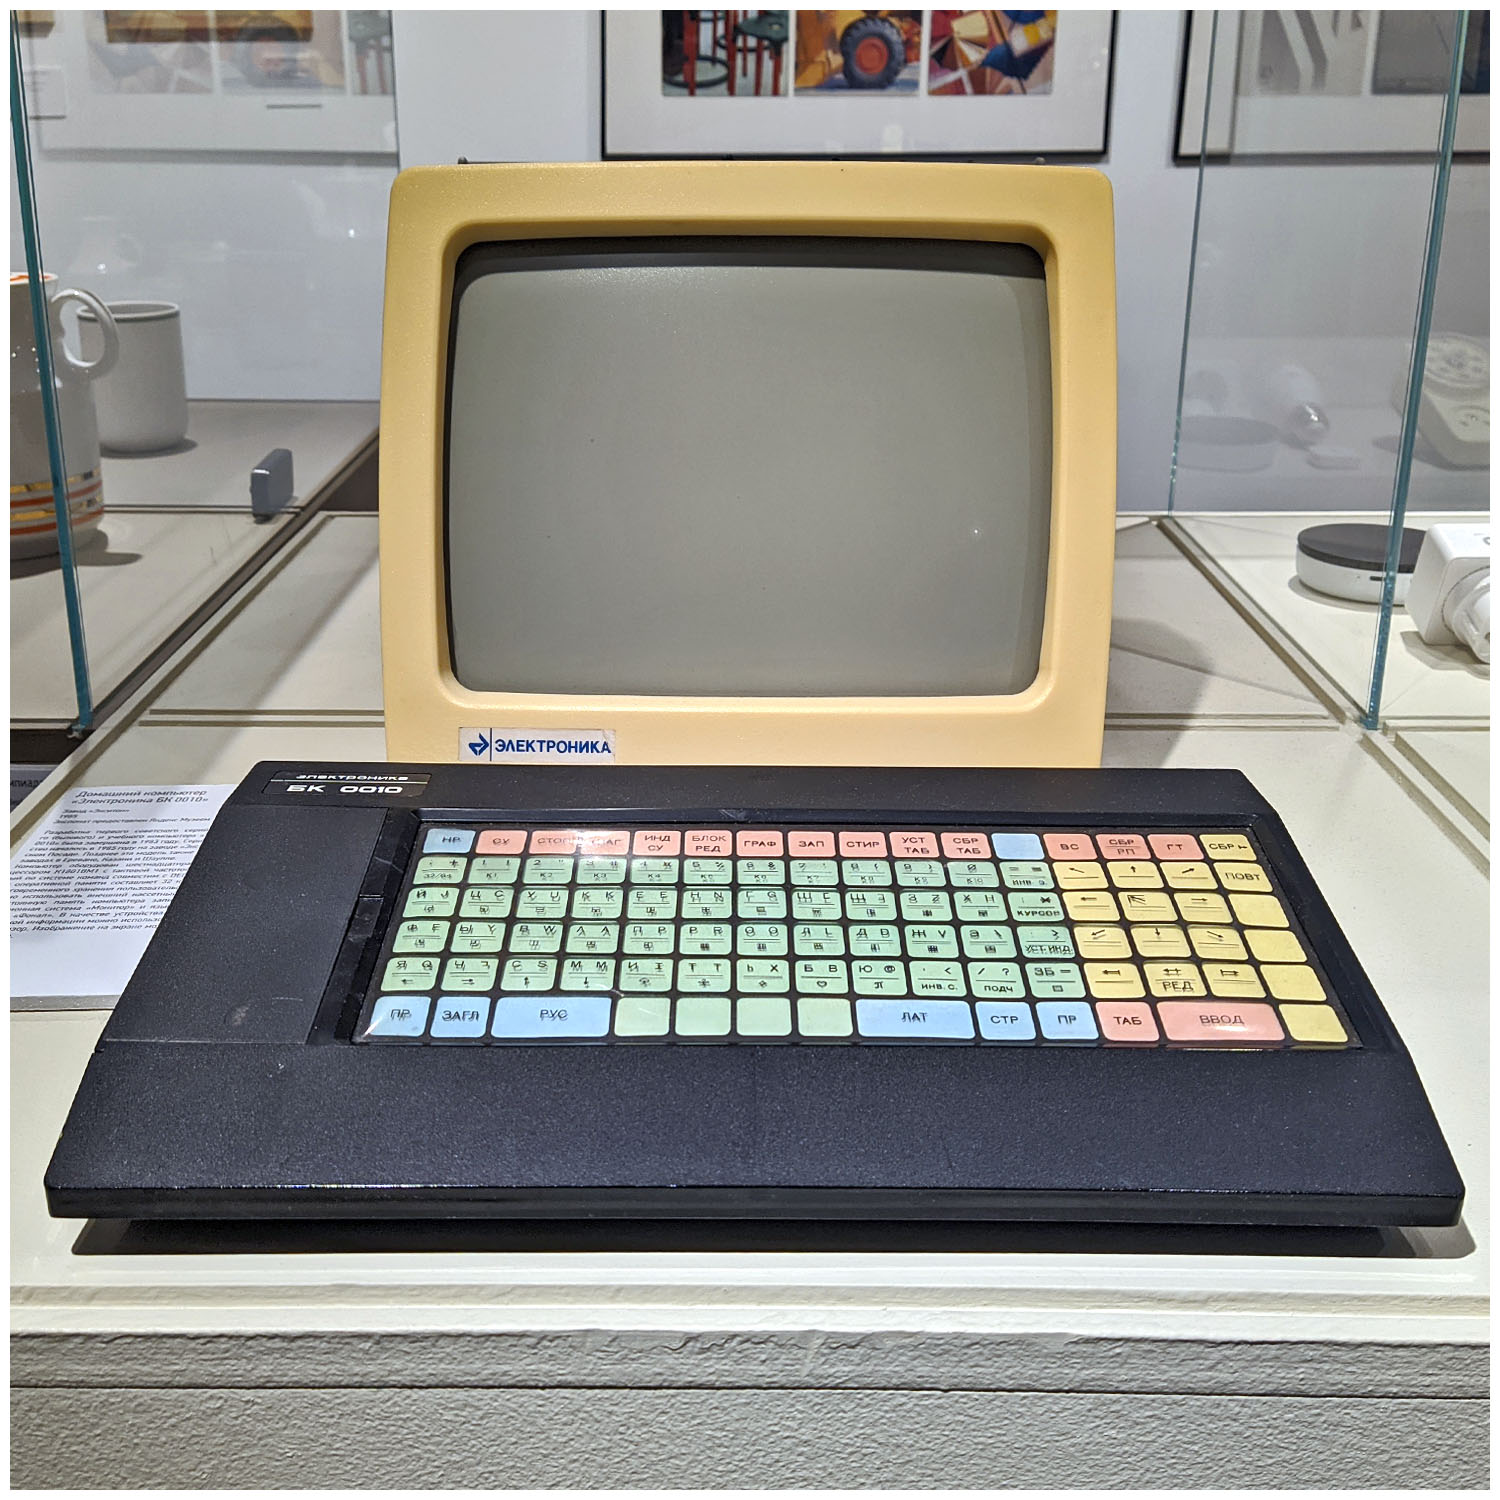 Домашний компьютер «Электроника БК 0010». 1985. Яндекс Музей